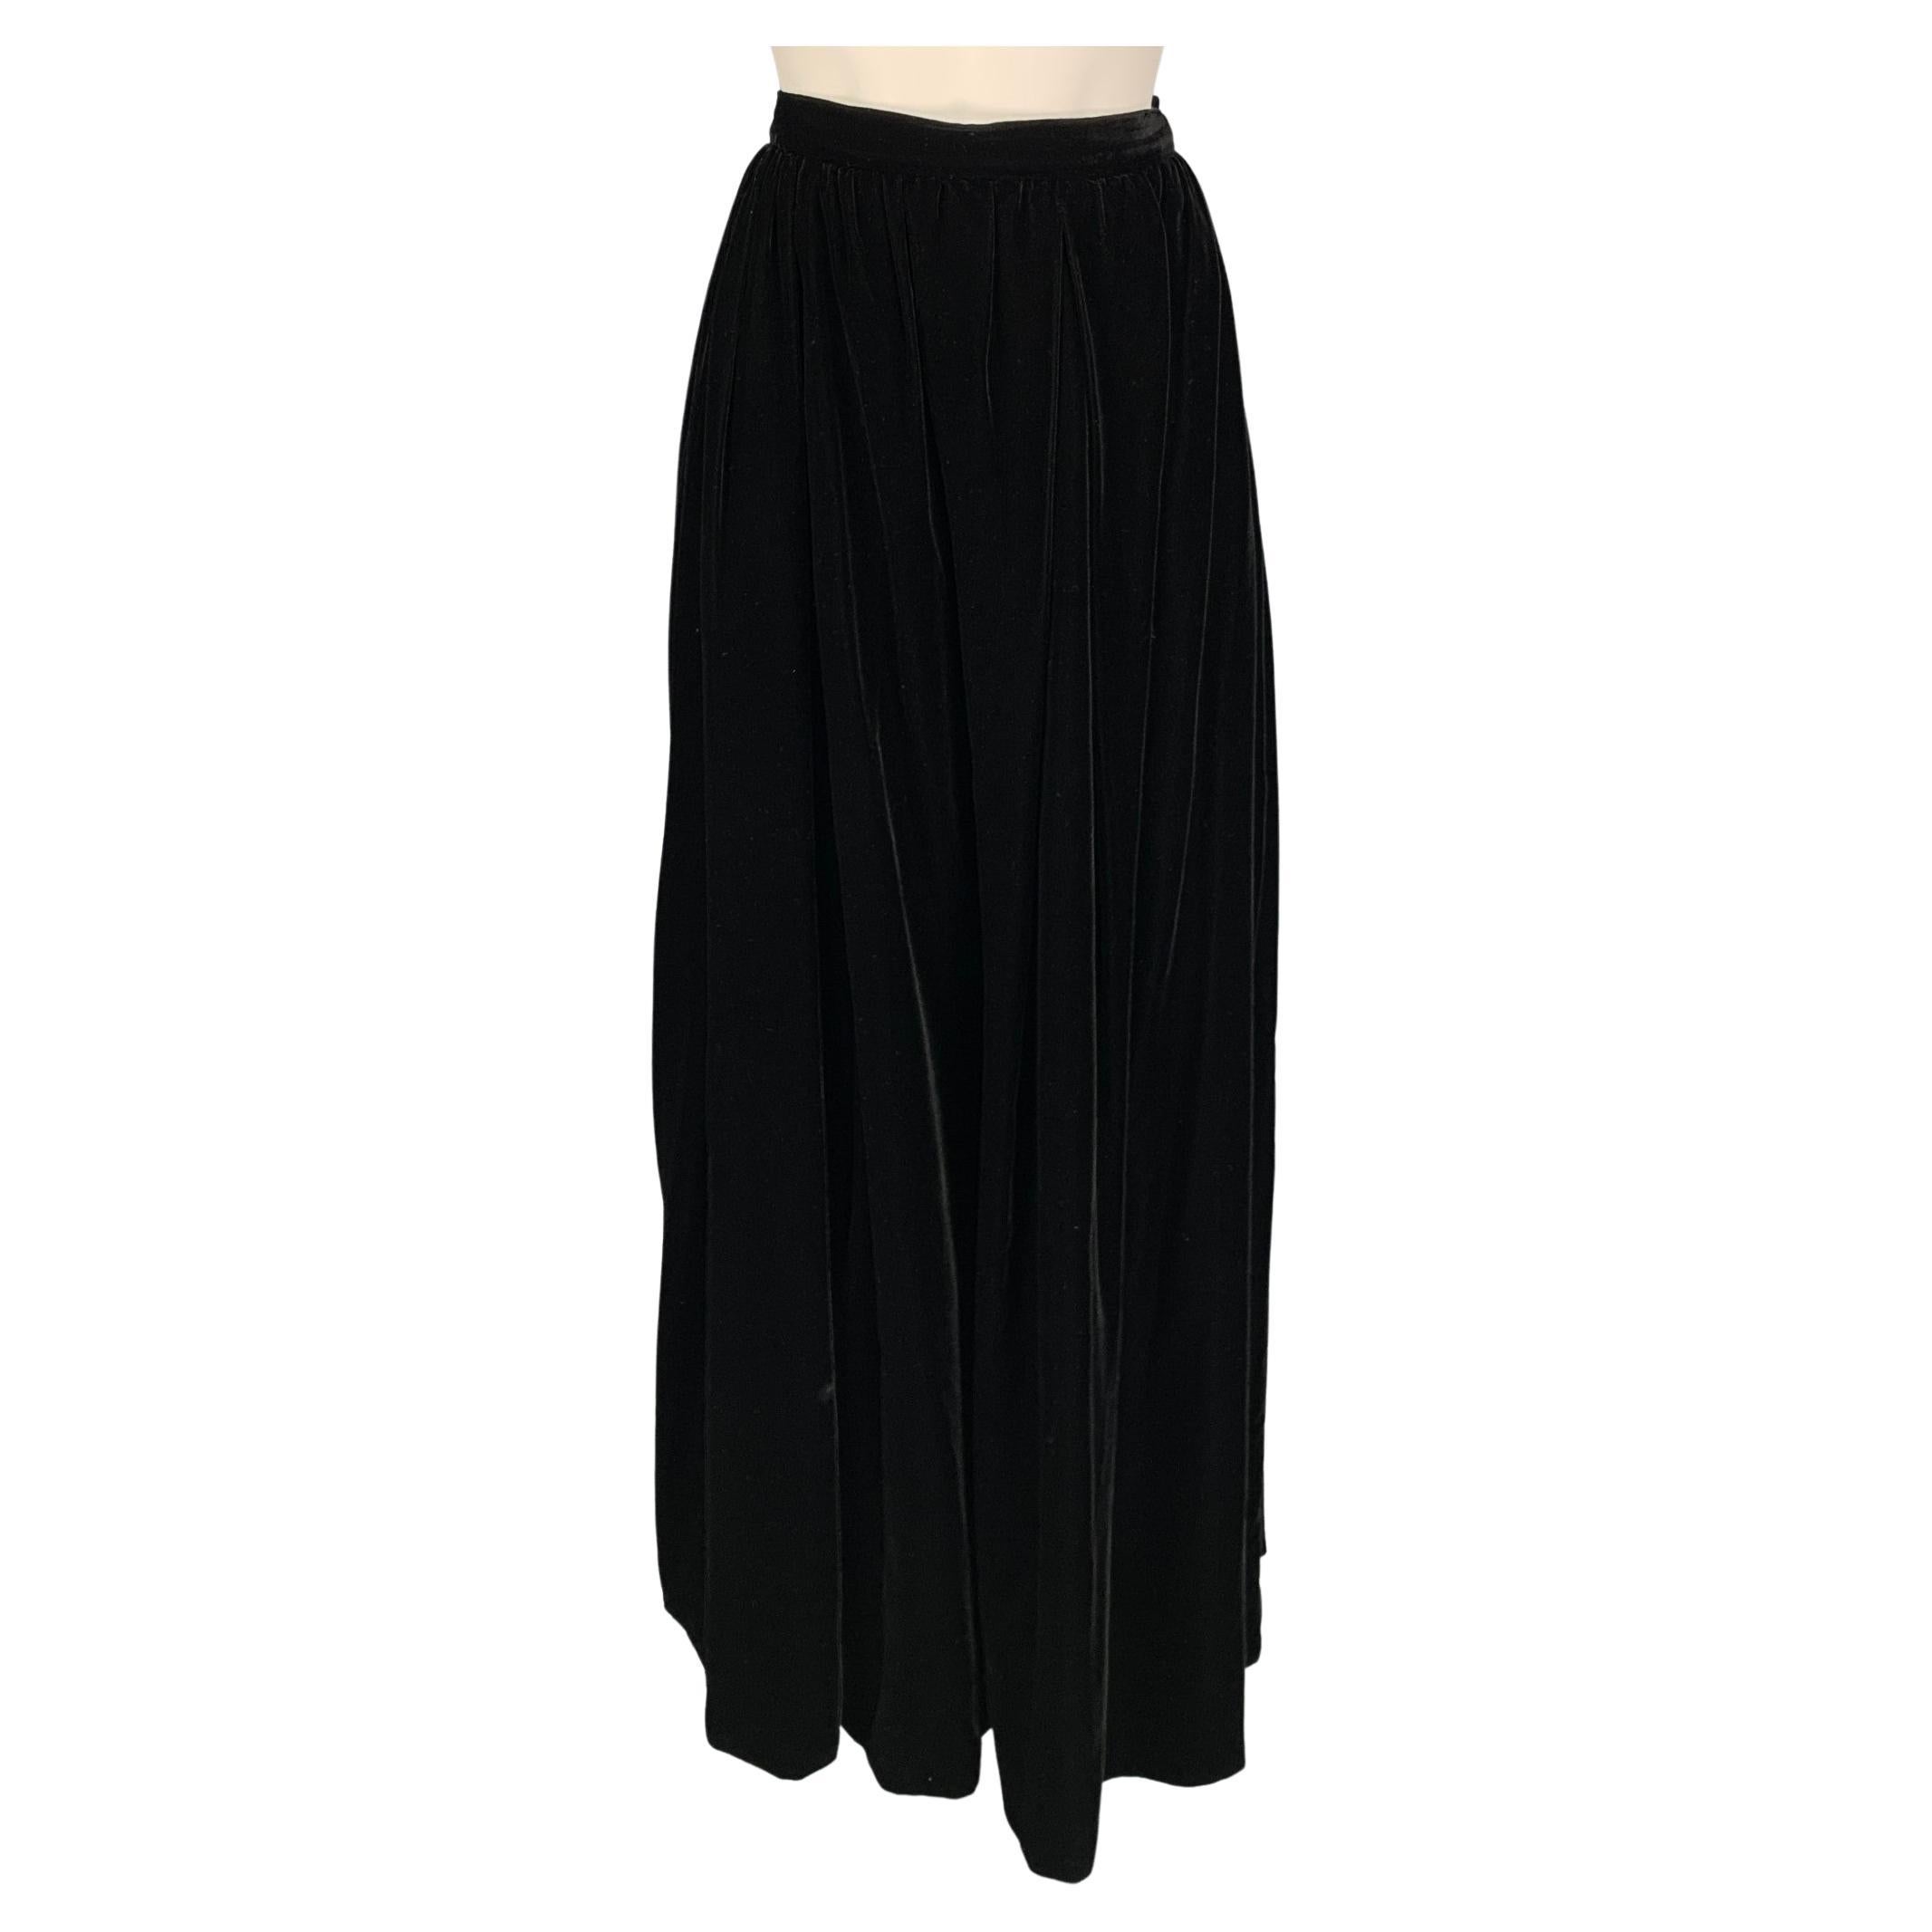 YVES SAINT LAURENT Size 8 Black Rayon Viscose Pleated Skirt